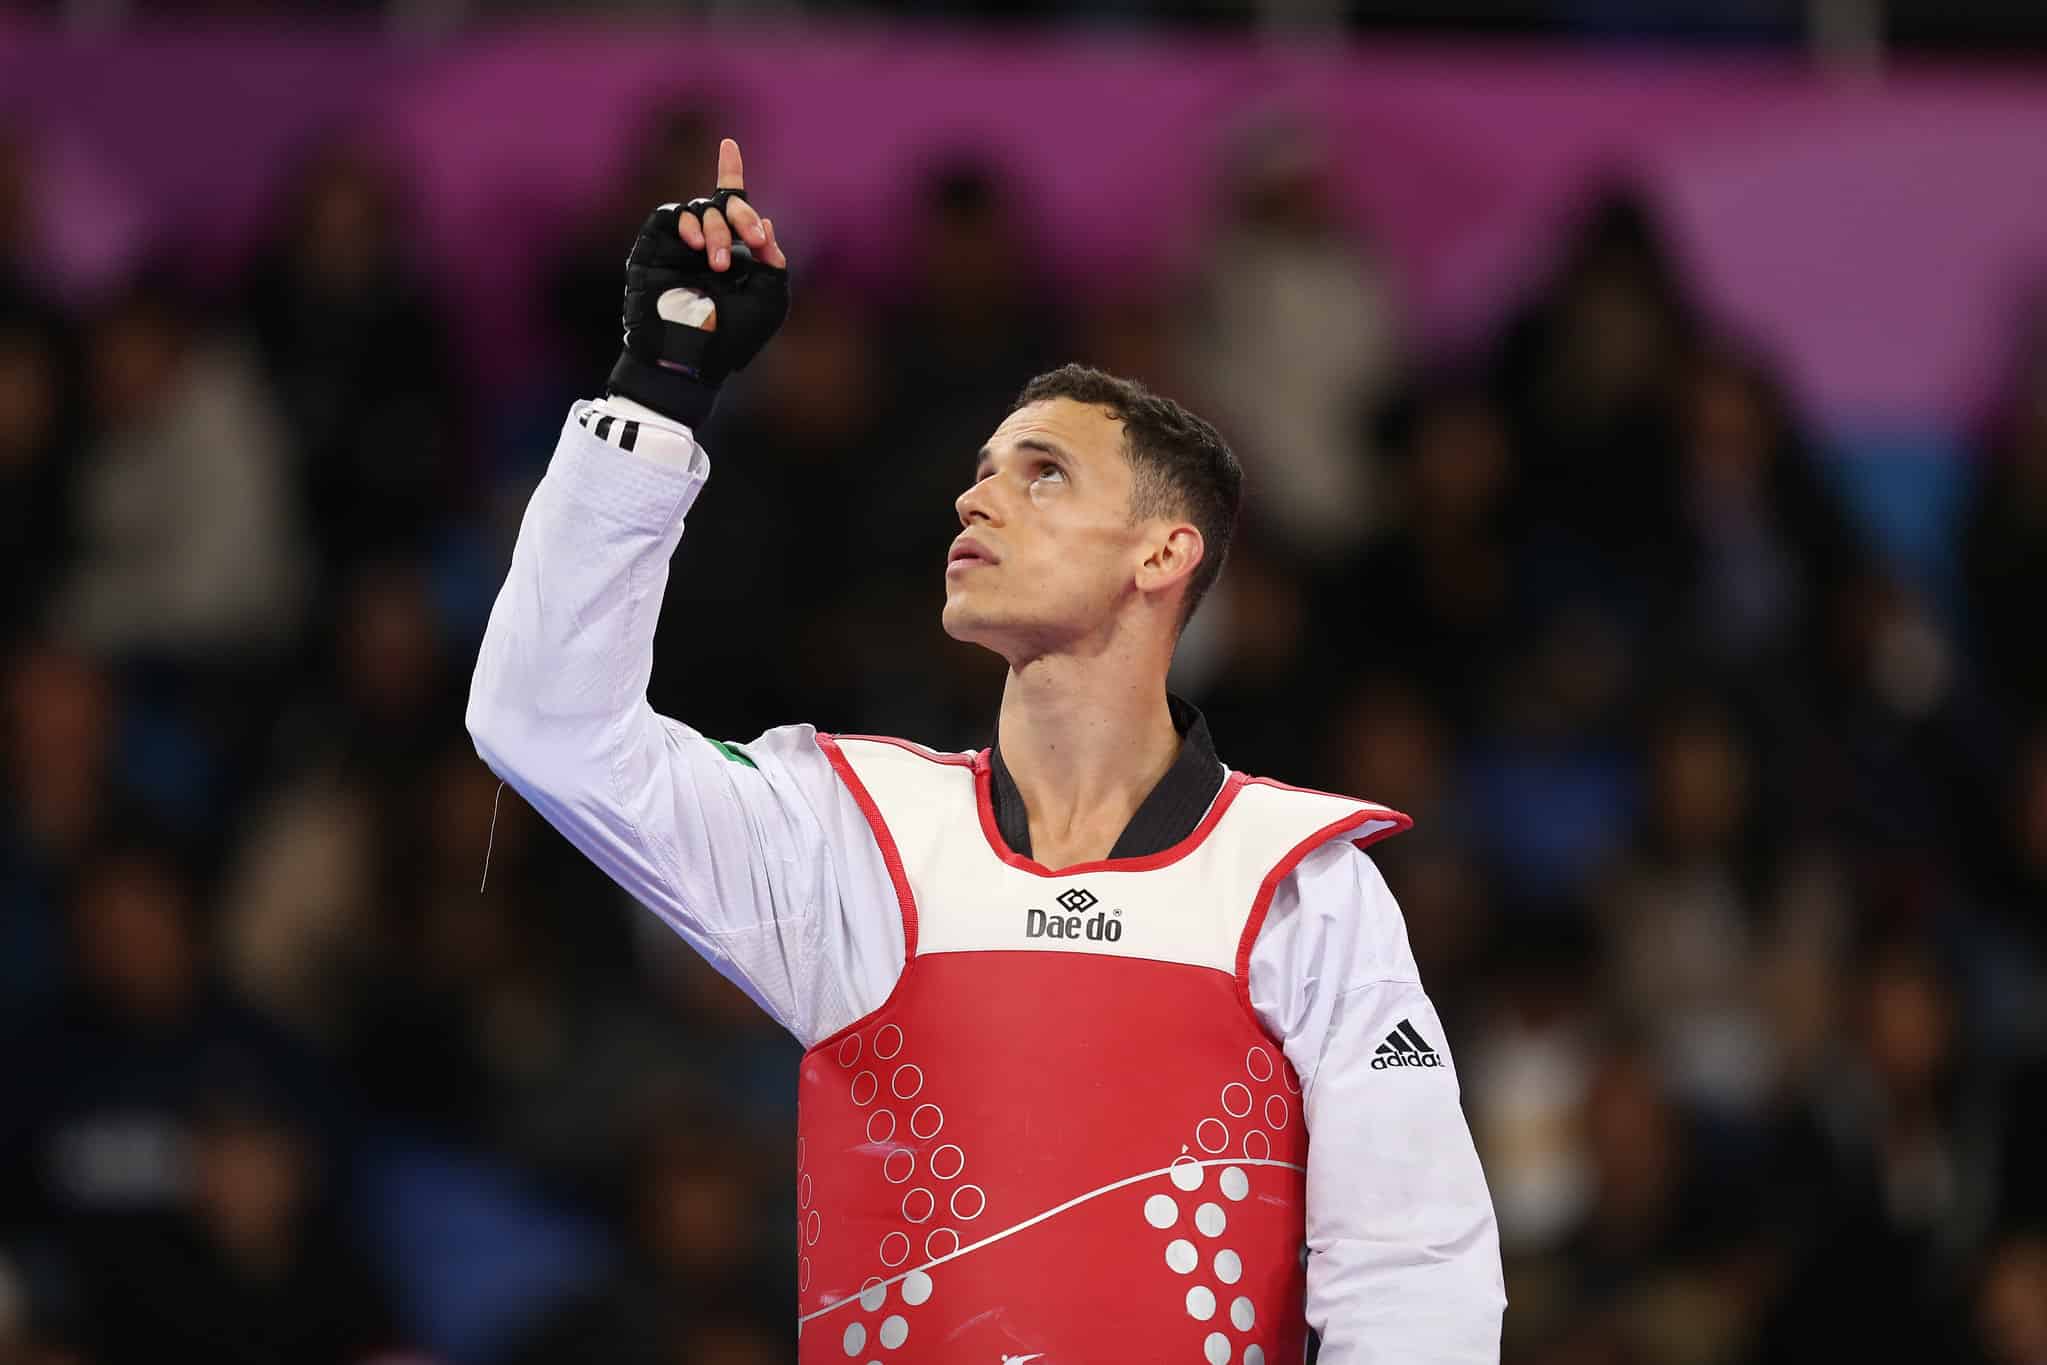 Ícaro Miguel é o novo líder do ranking mundial e representará o Brasil nos Jogos Olímpicos de Tóquio